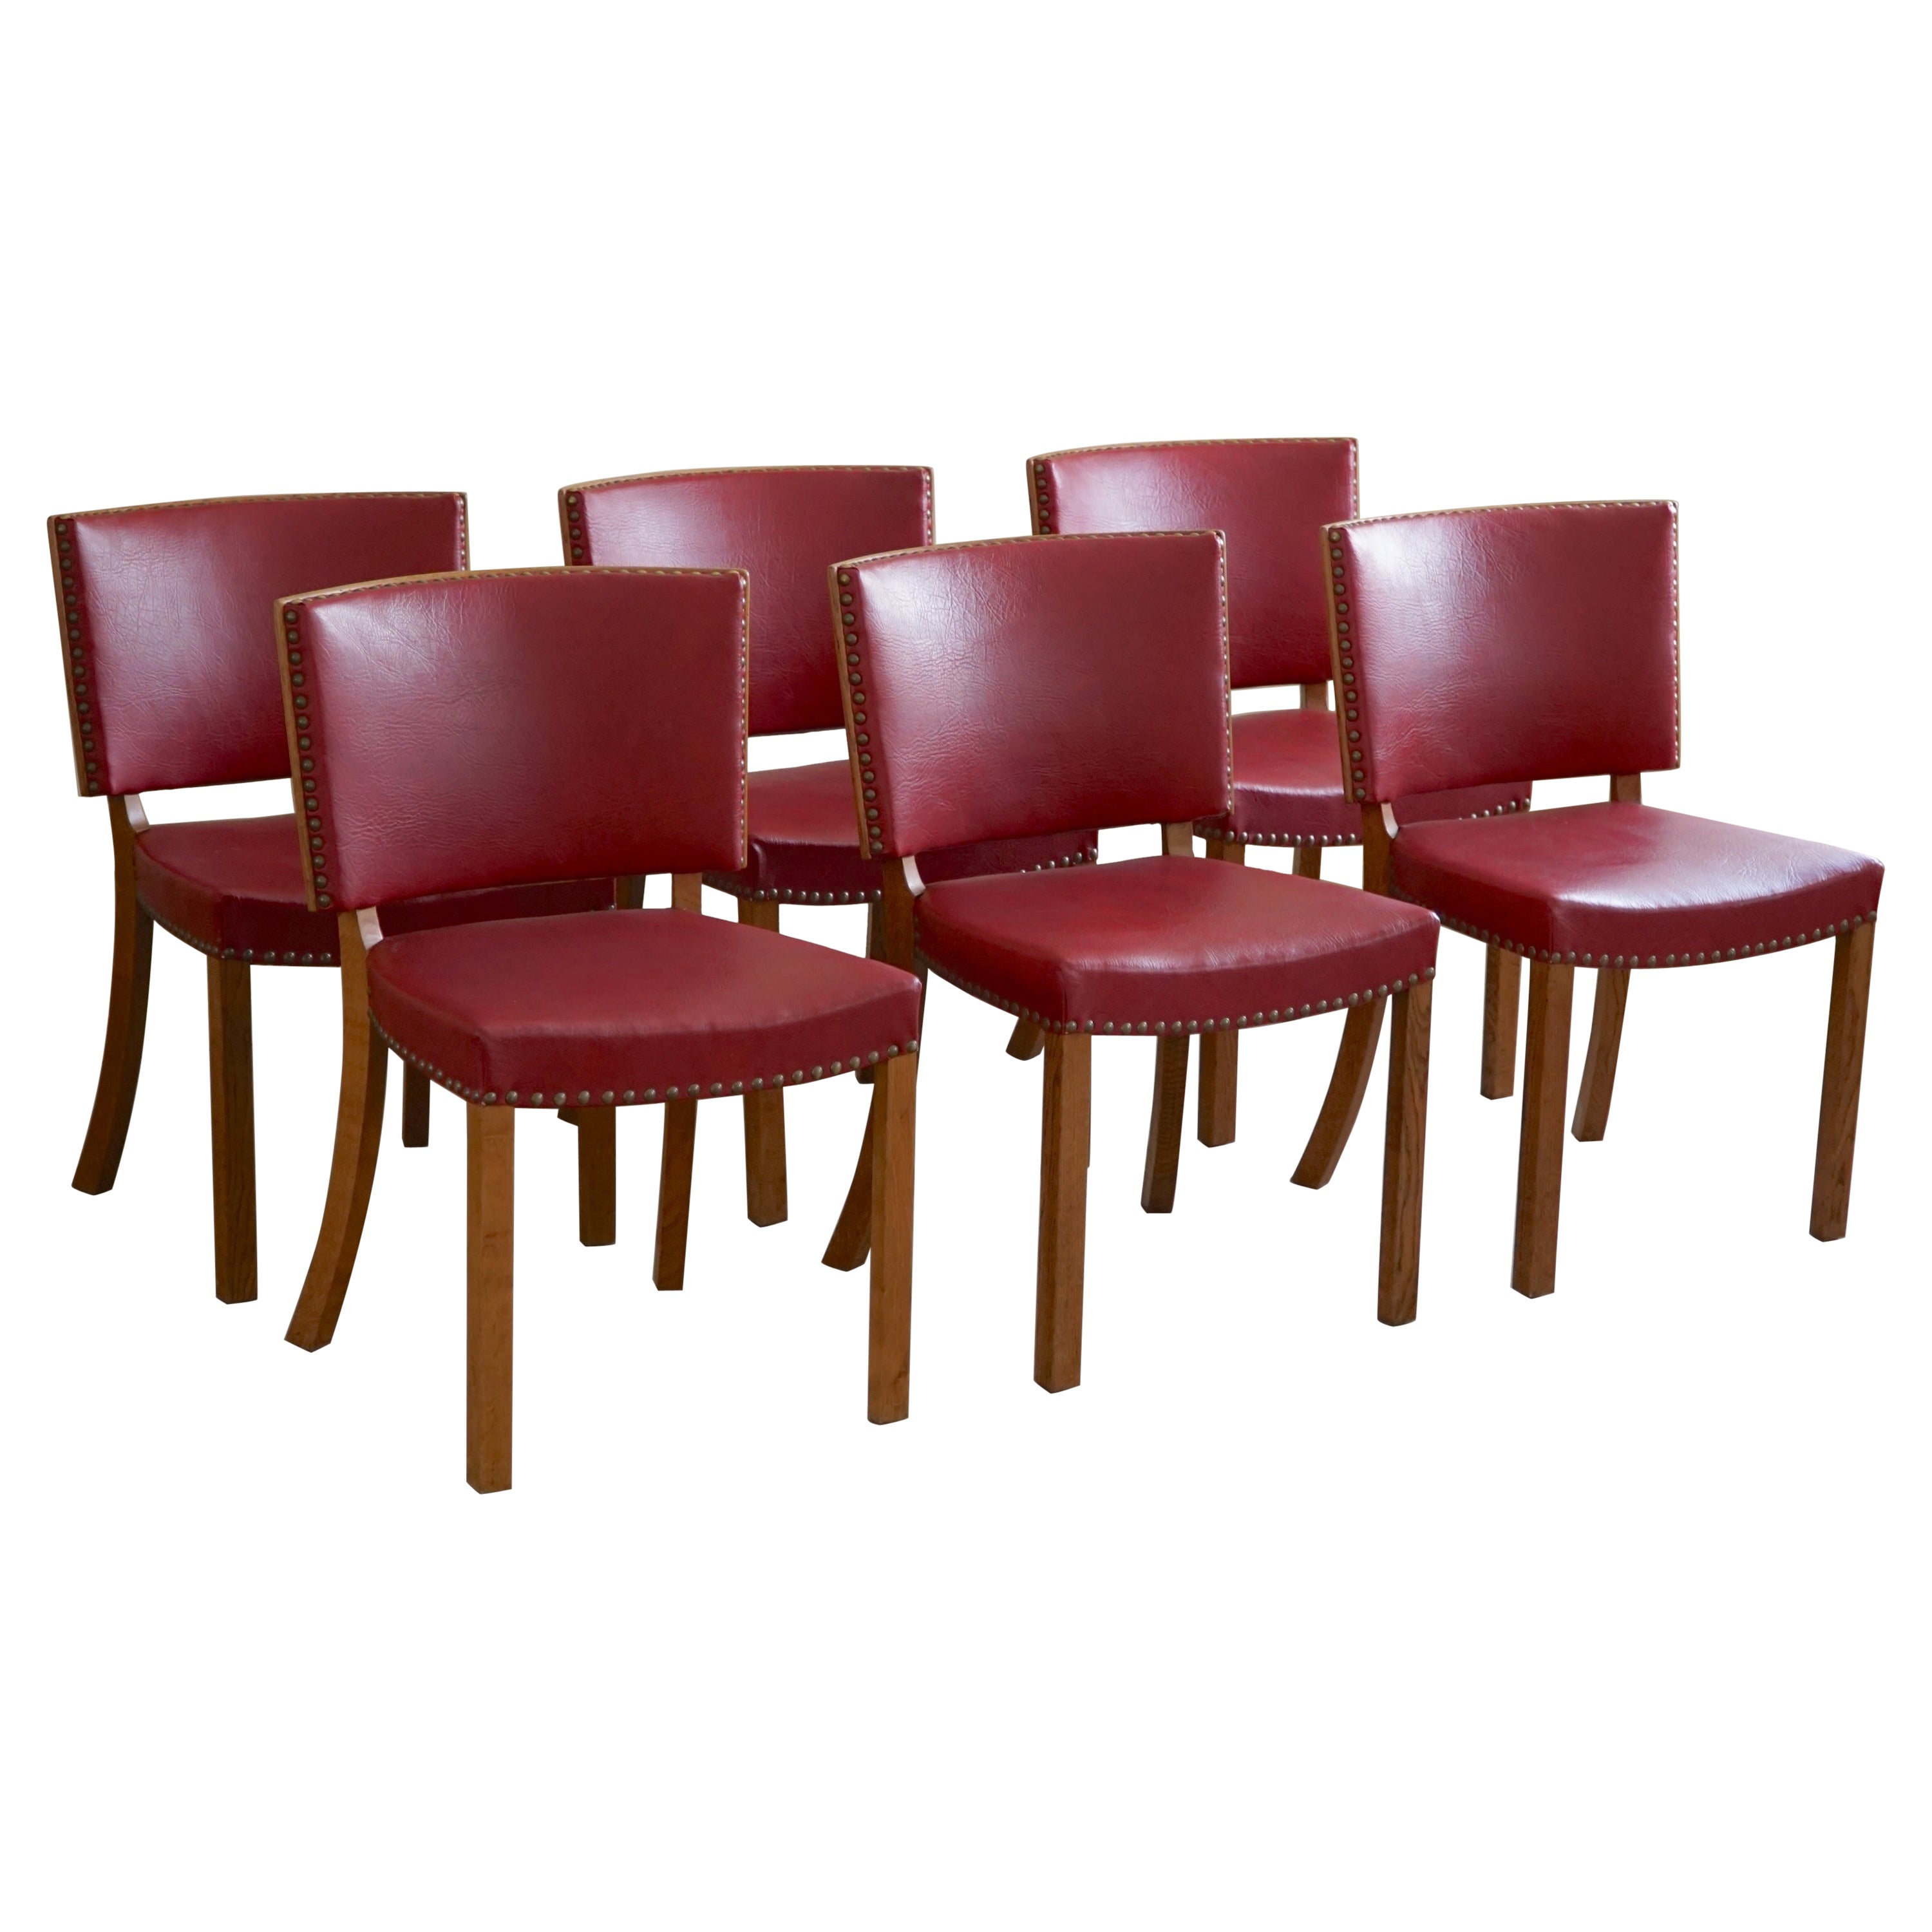 A set of 6 Dining Chairs in Oak and Leather, Danish Modern, Kaj Gottlob, 1950s